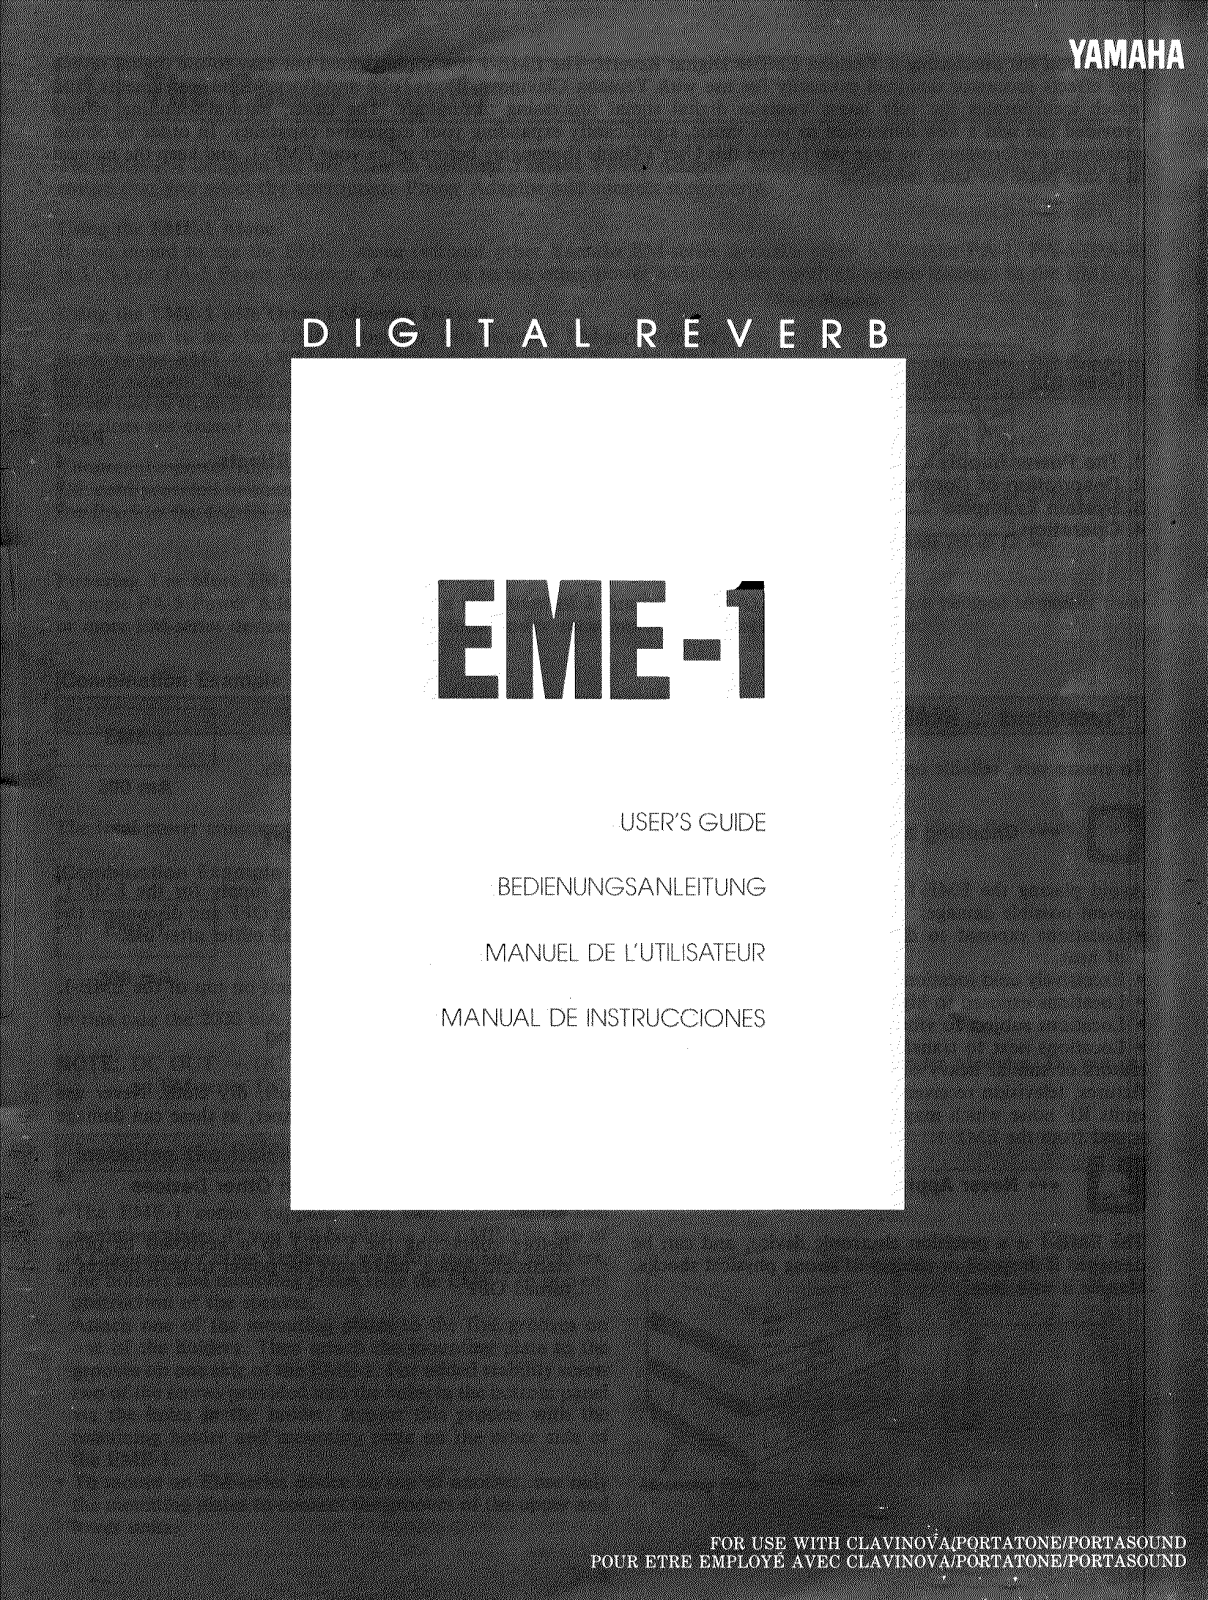 Yamaha EME-1 User Manual